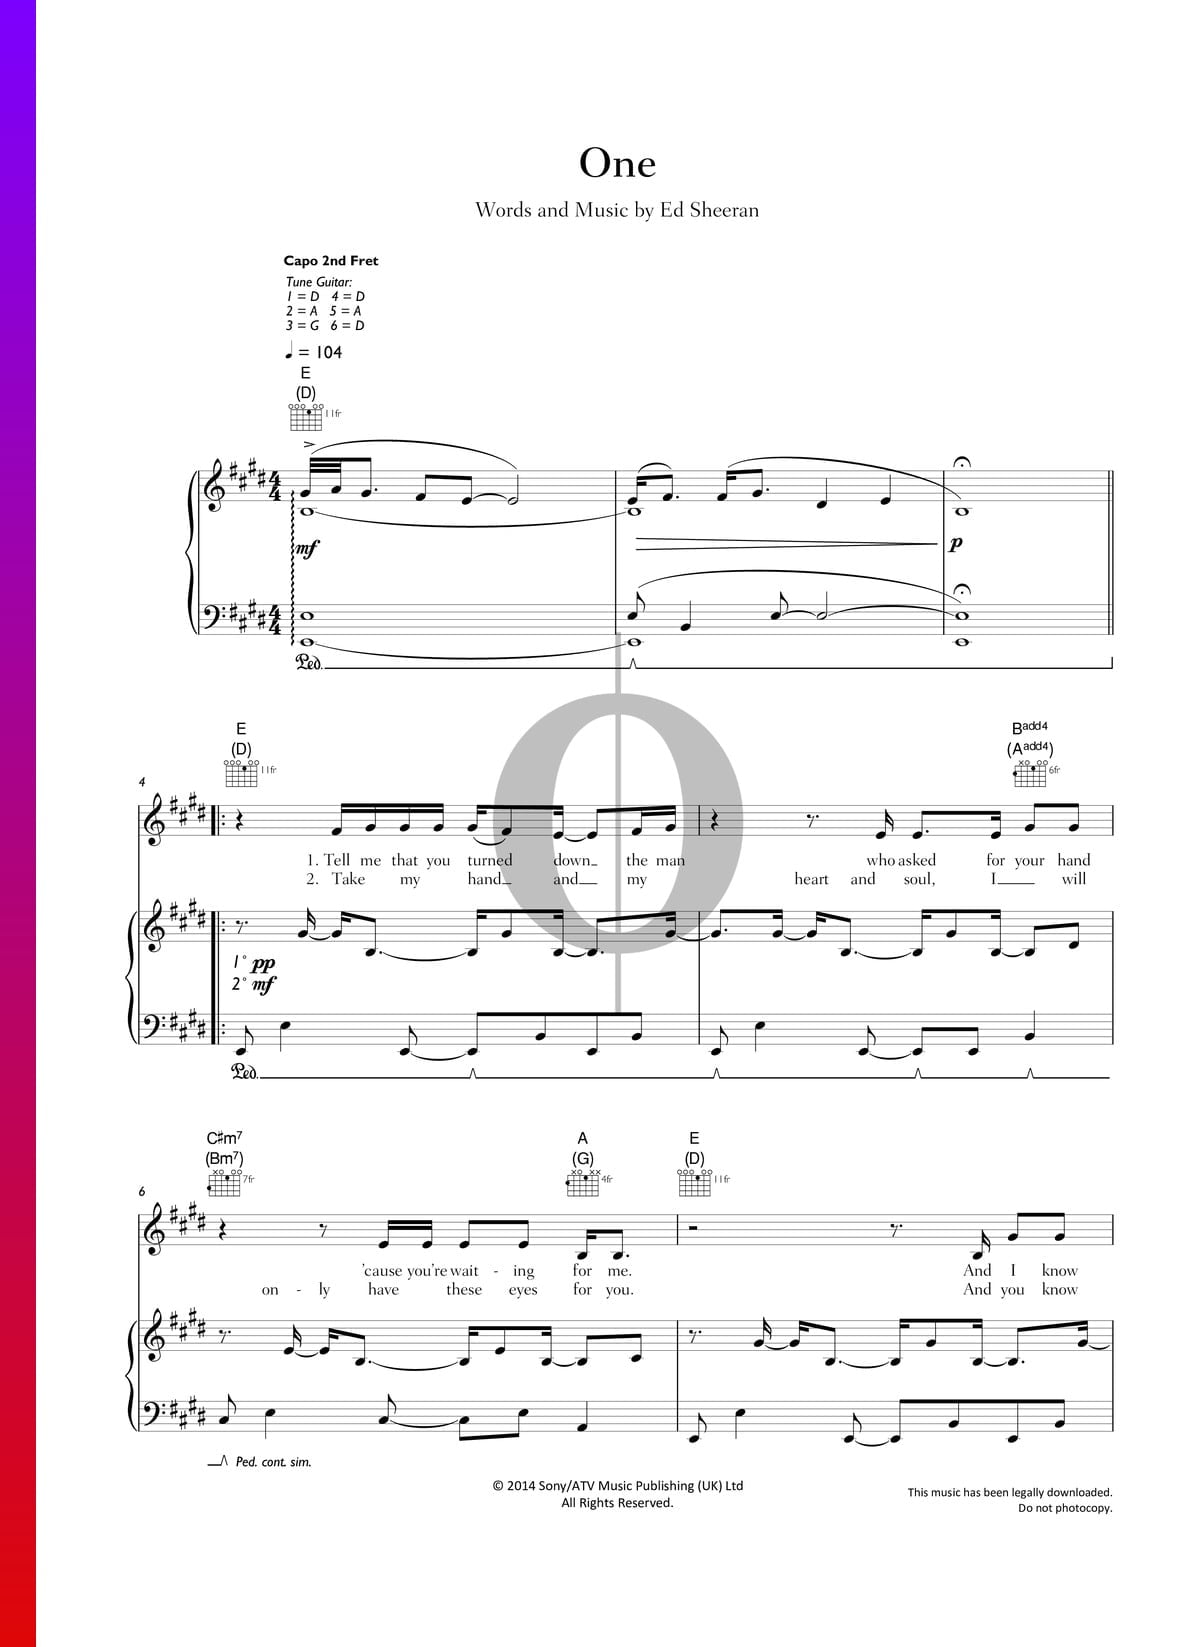 One Sheet Music (Piano, Guitar, Voice) - OKTAV